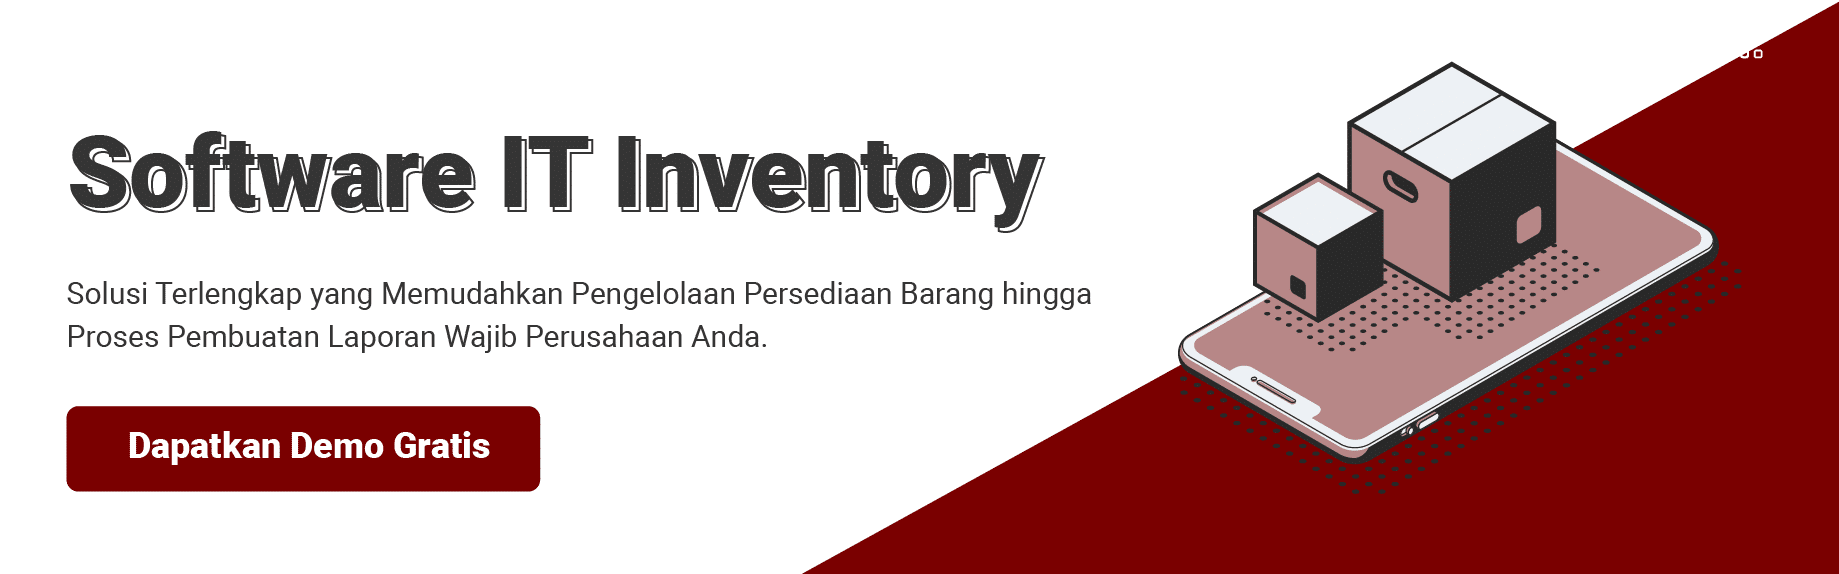 IT Inventory KITE